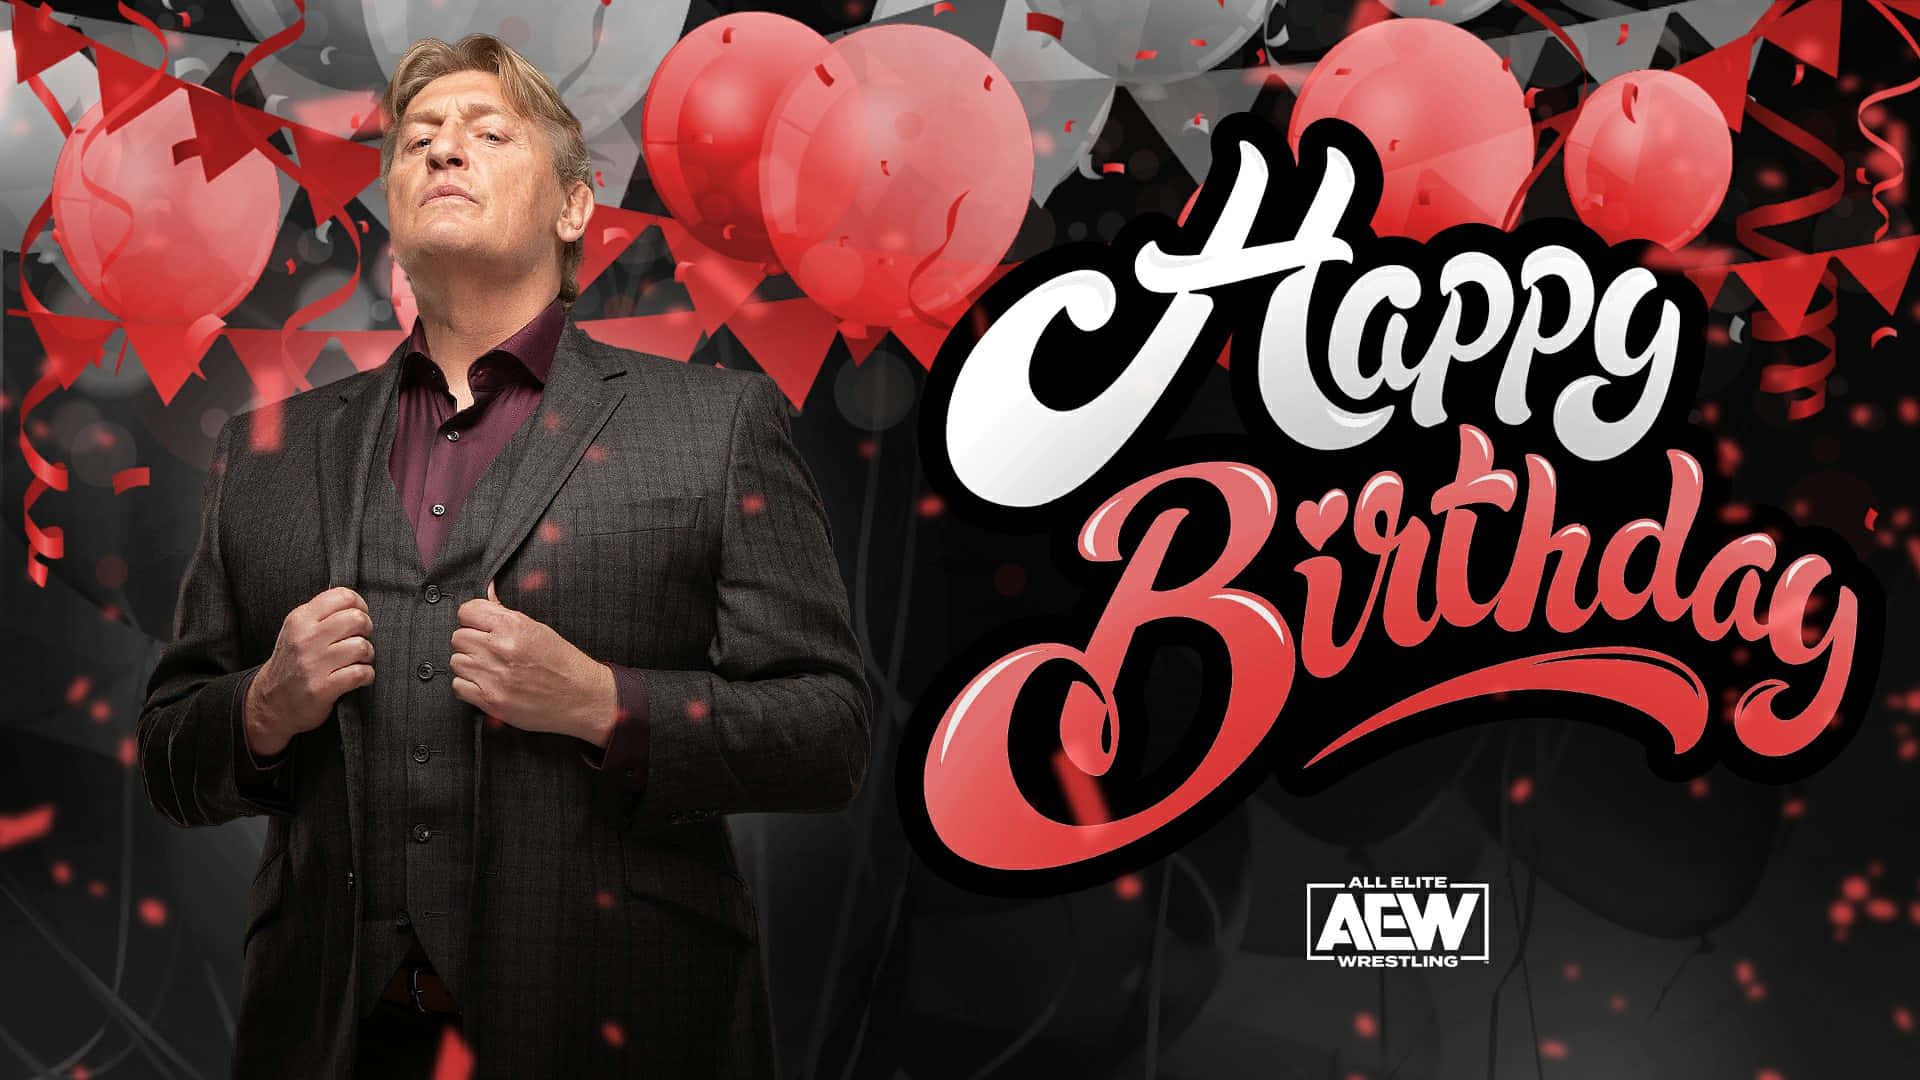 William Regal WWE Wrestler Happy Birthday Greeting Wallpaper